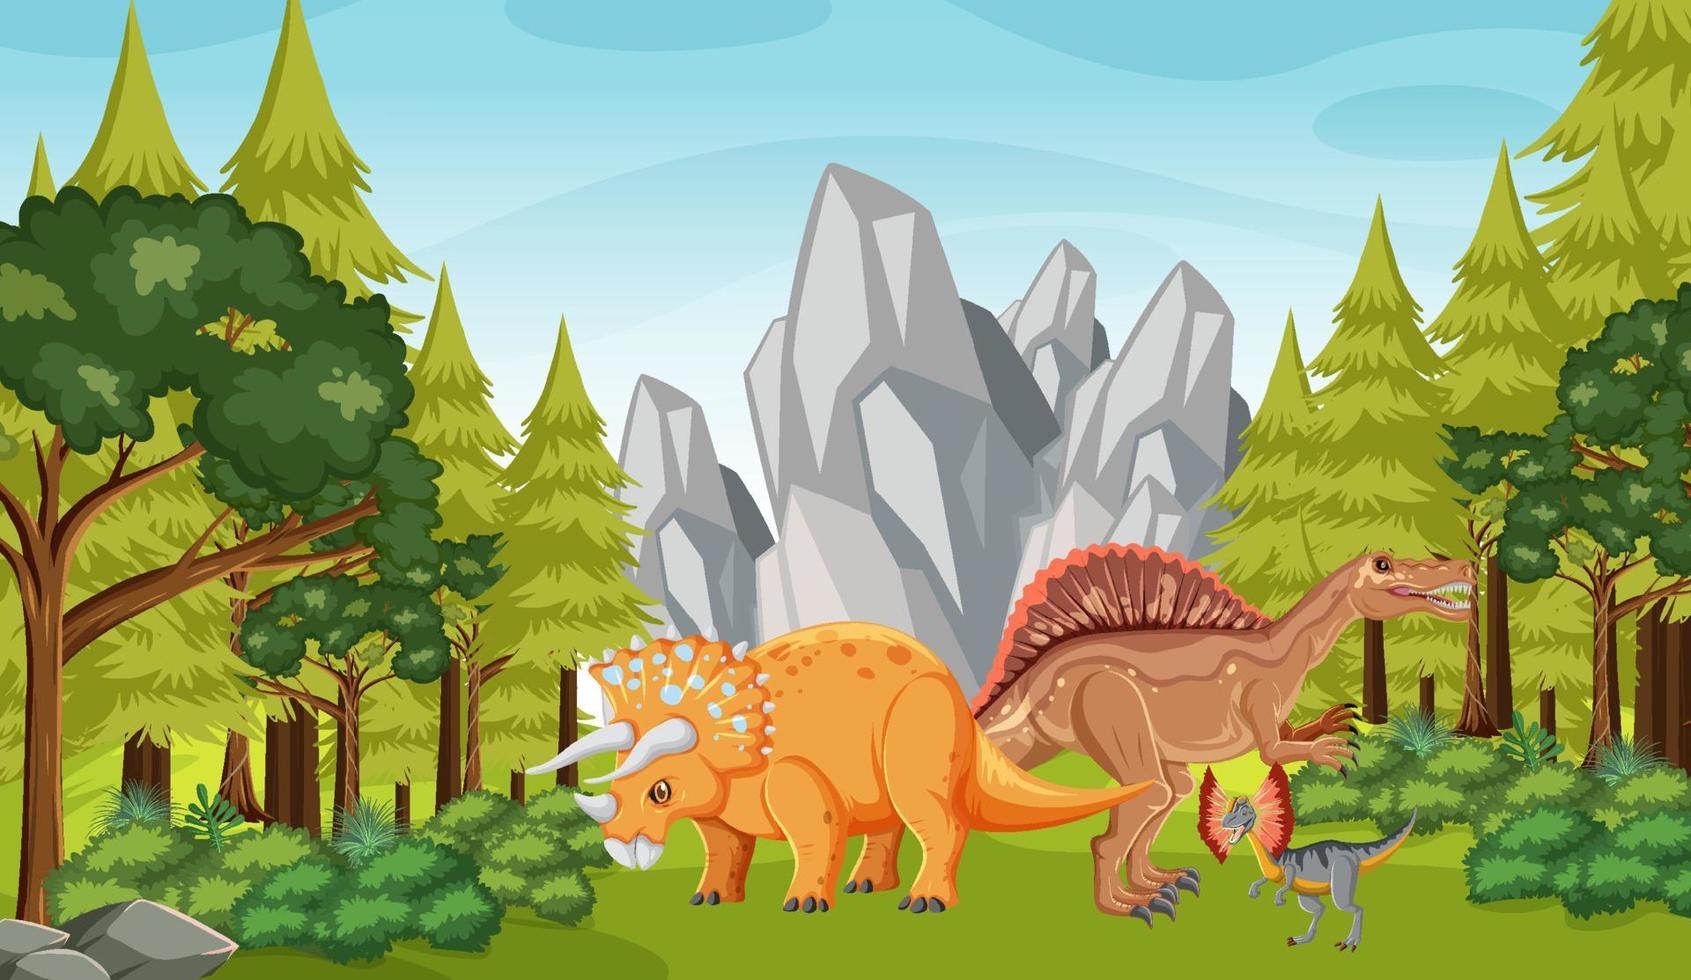 Szene mit Dinosauriern im Wald vektor